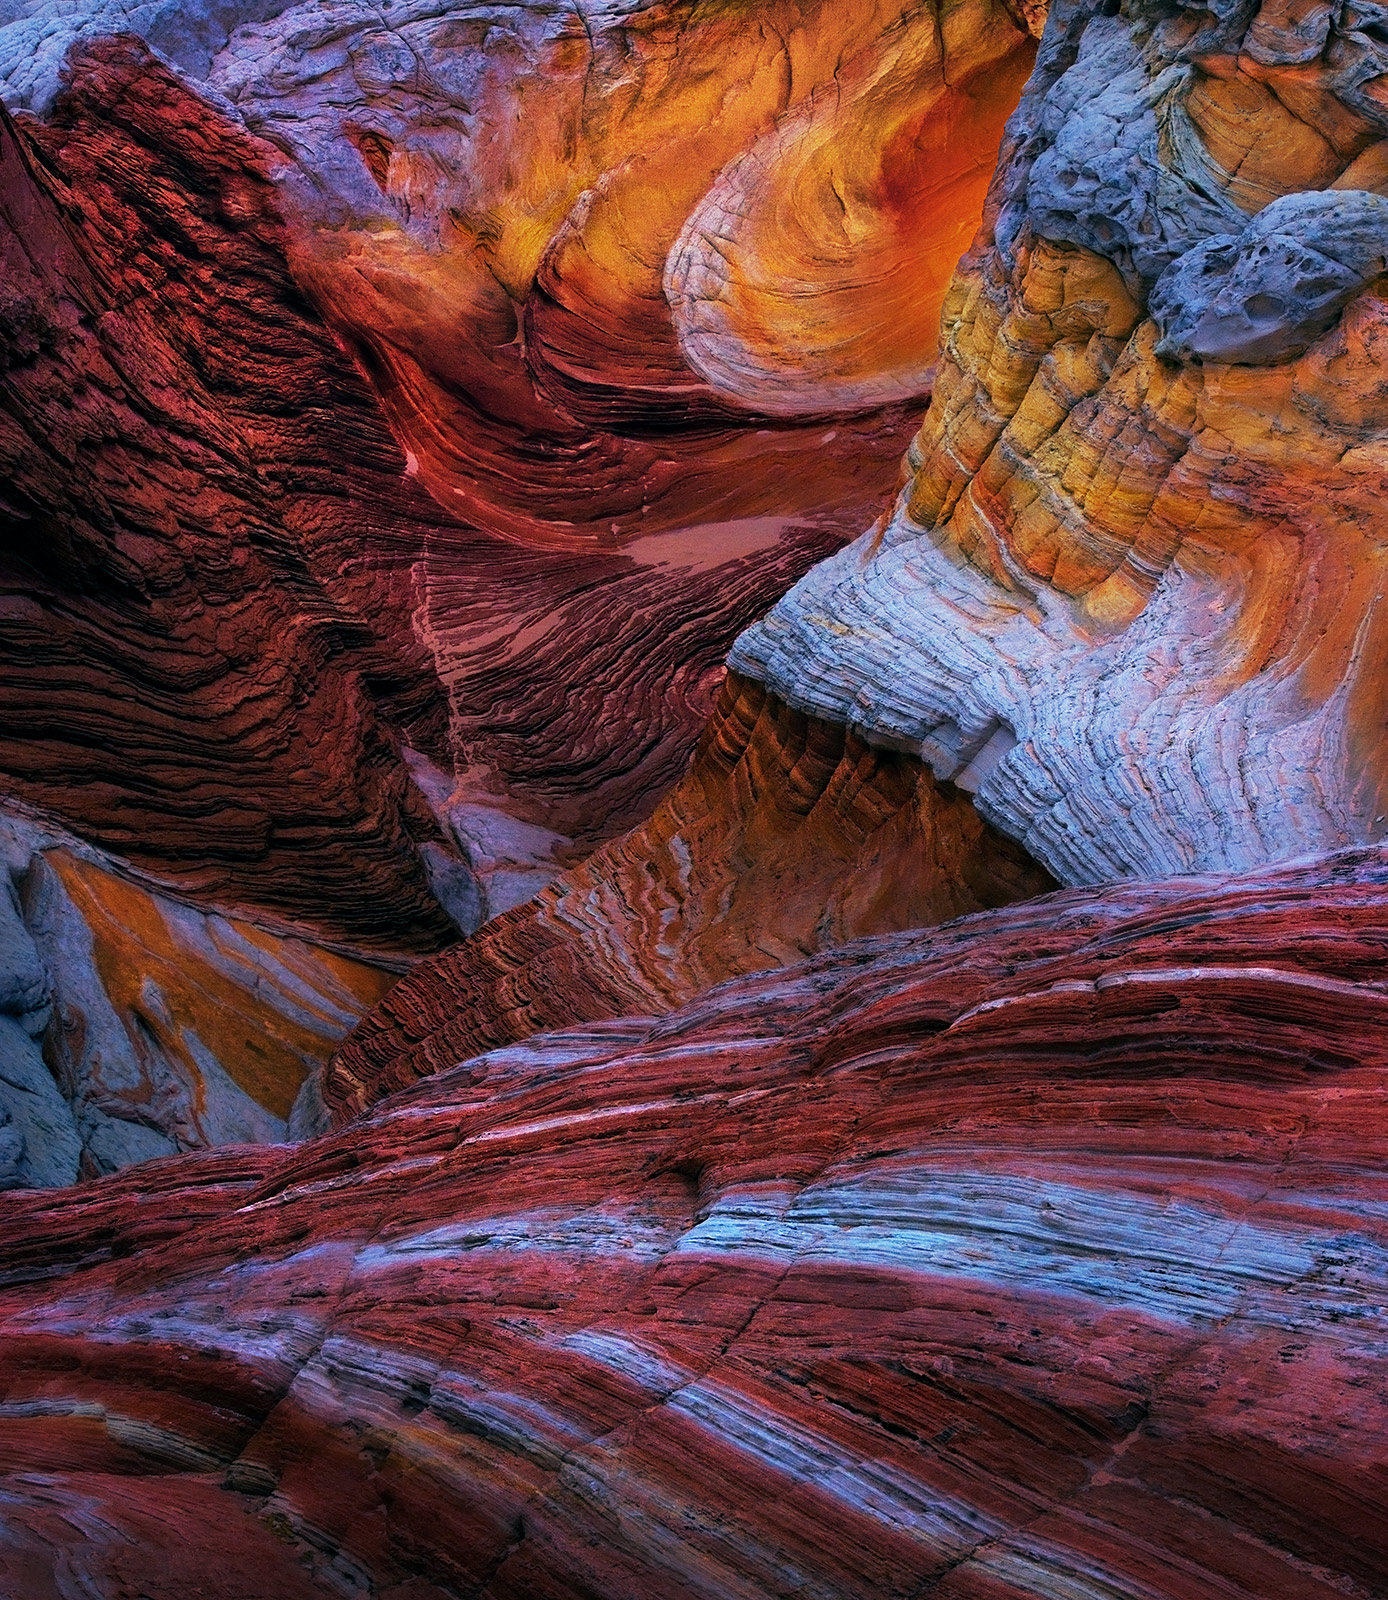 Swirls of Arizona sandstone with lighting emphasized.